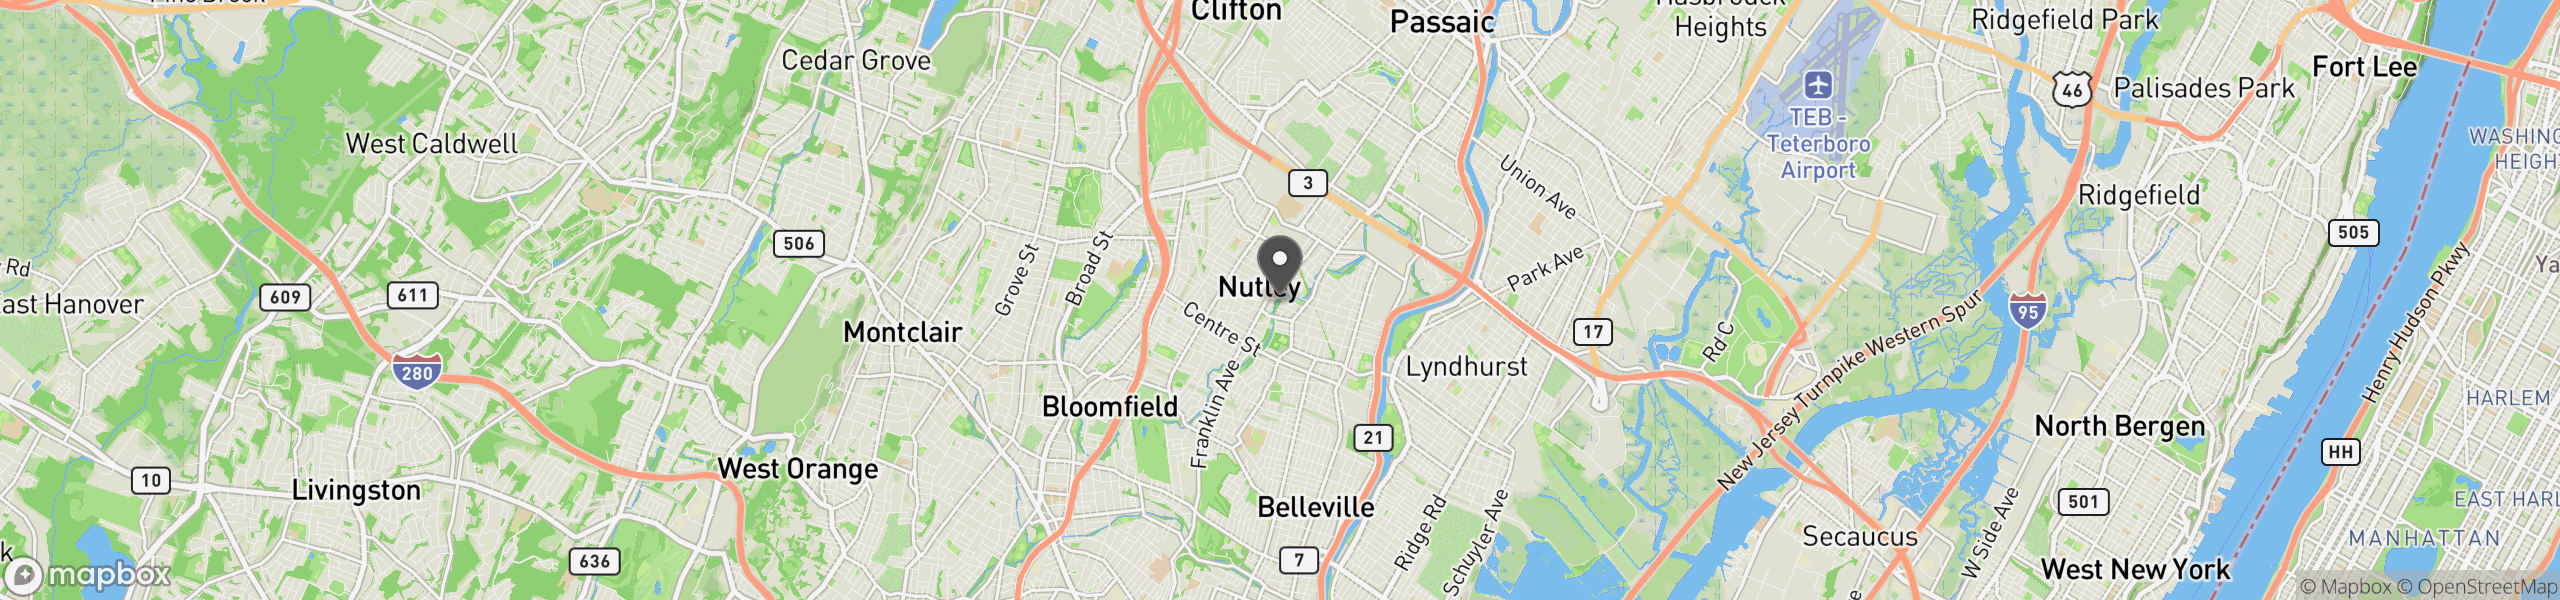 Nutley, NJ 07110